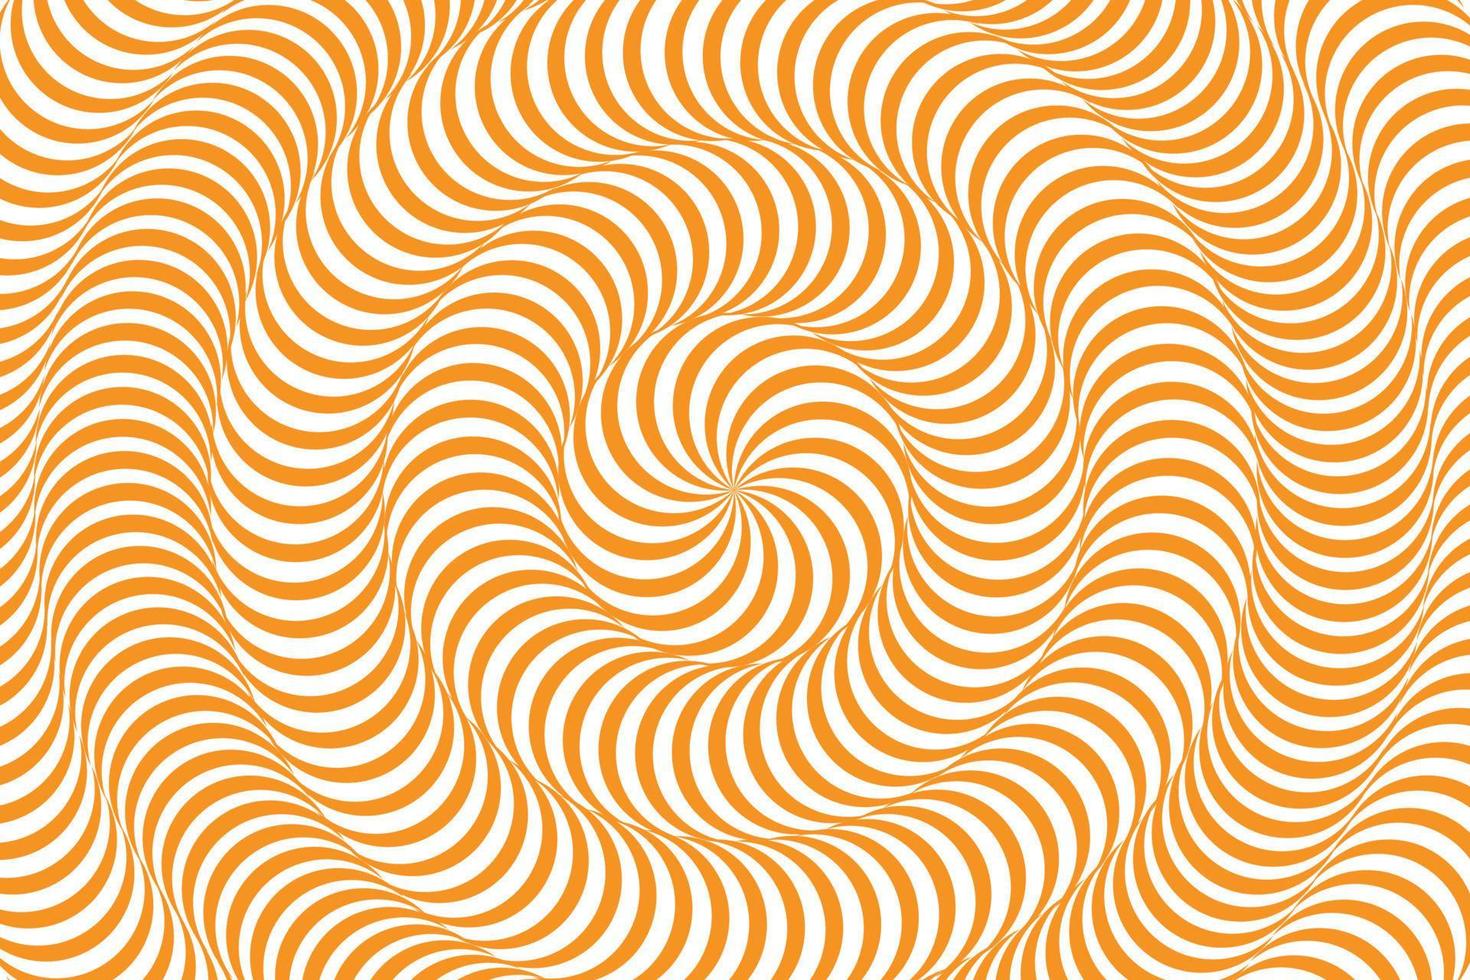 abstrakt optisk illusion spiral bakgrund vektor